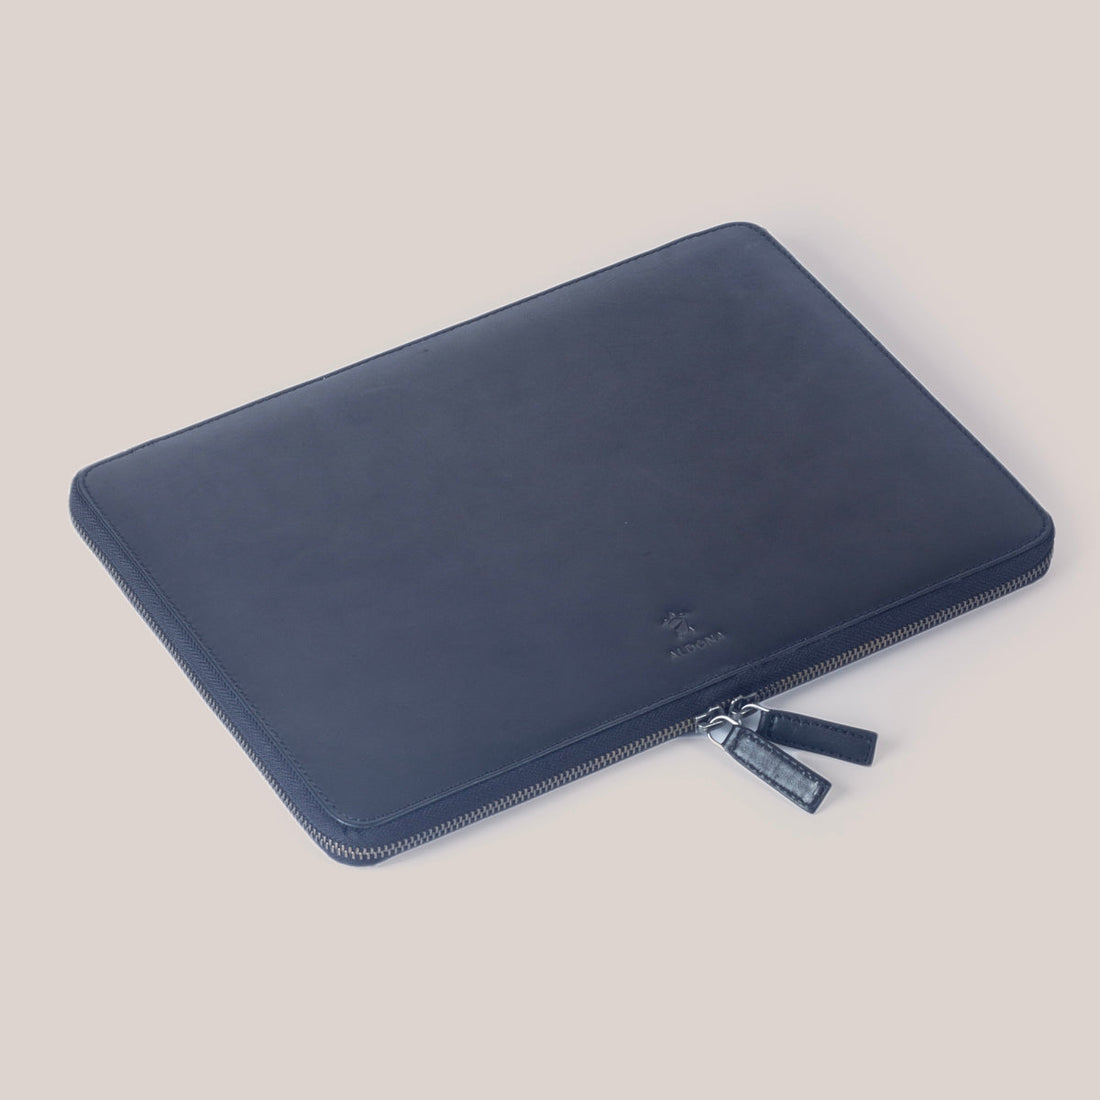 Microsoft Surface Pro 9 Zippered Laptop Case - Cognac